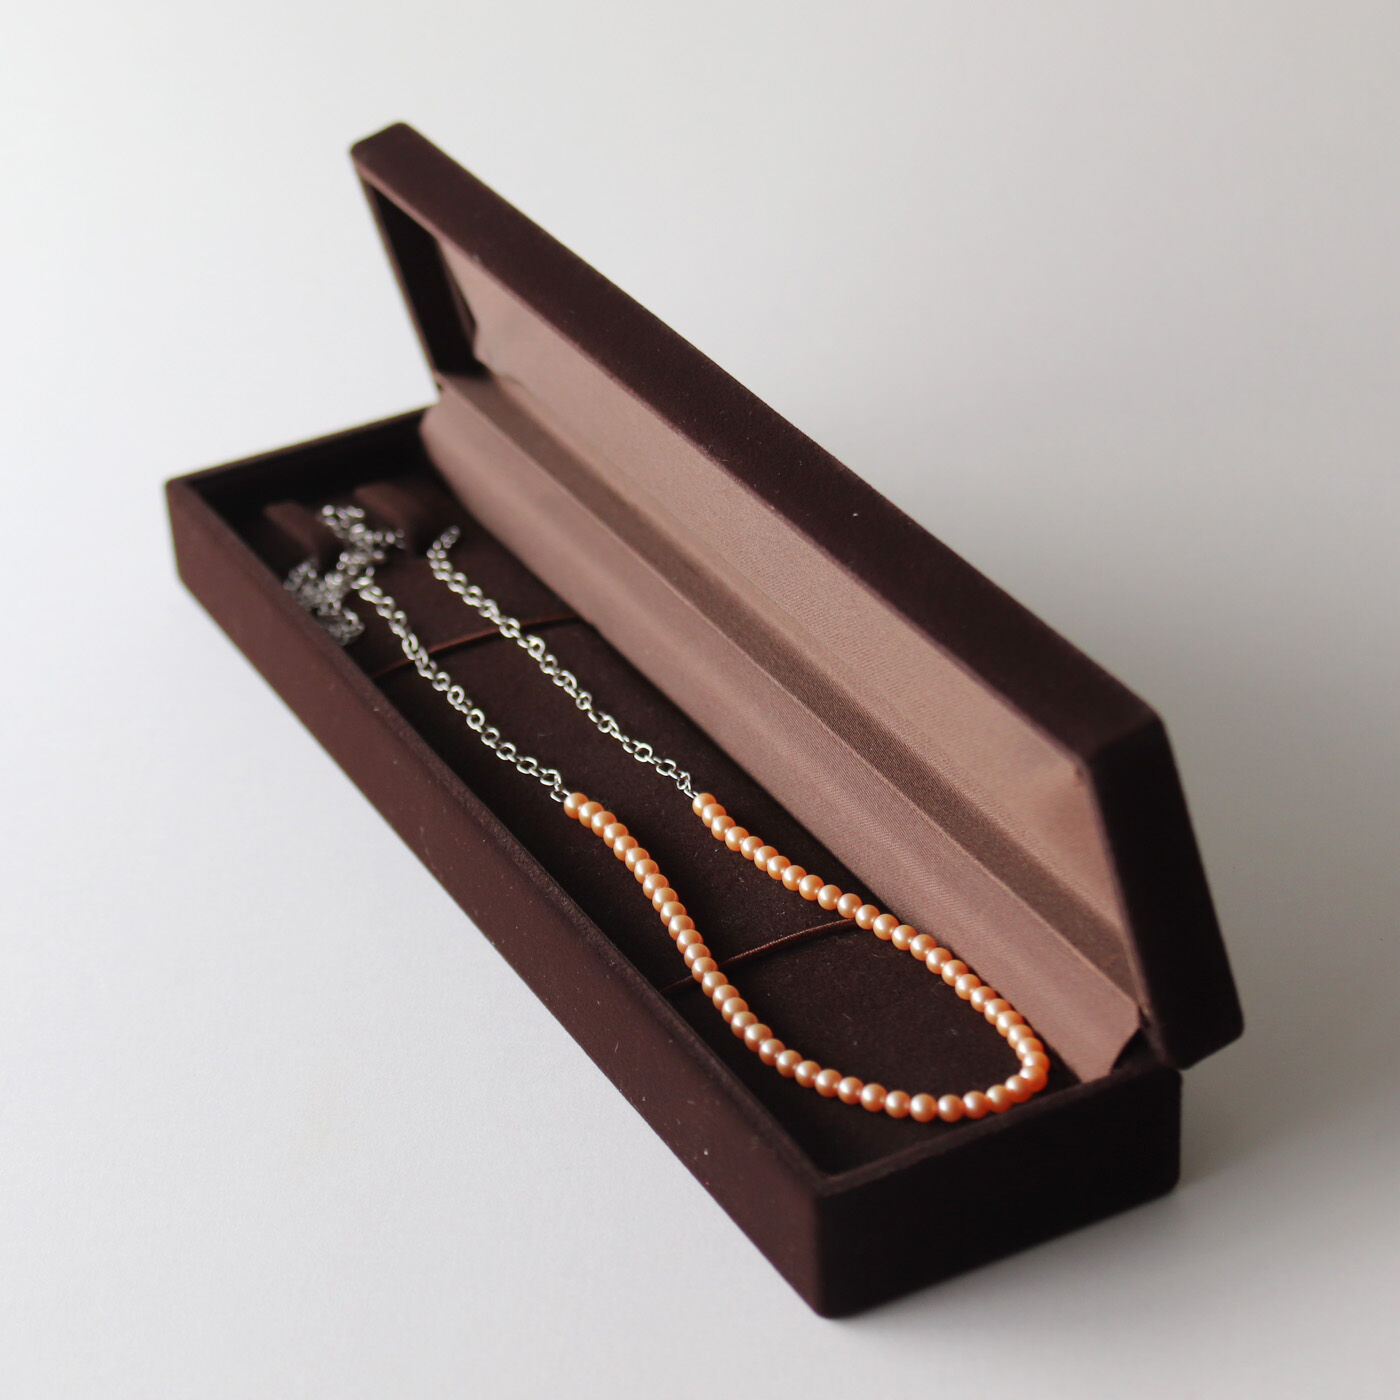 ＆Stories|神戸の老舗真珠メーカーと作った ピーチメルバパールのチェーンネックレス〈シルバー925〉|箱入りなのでギフトにも。